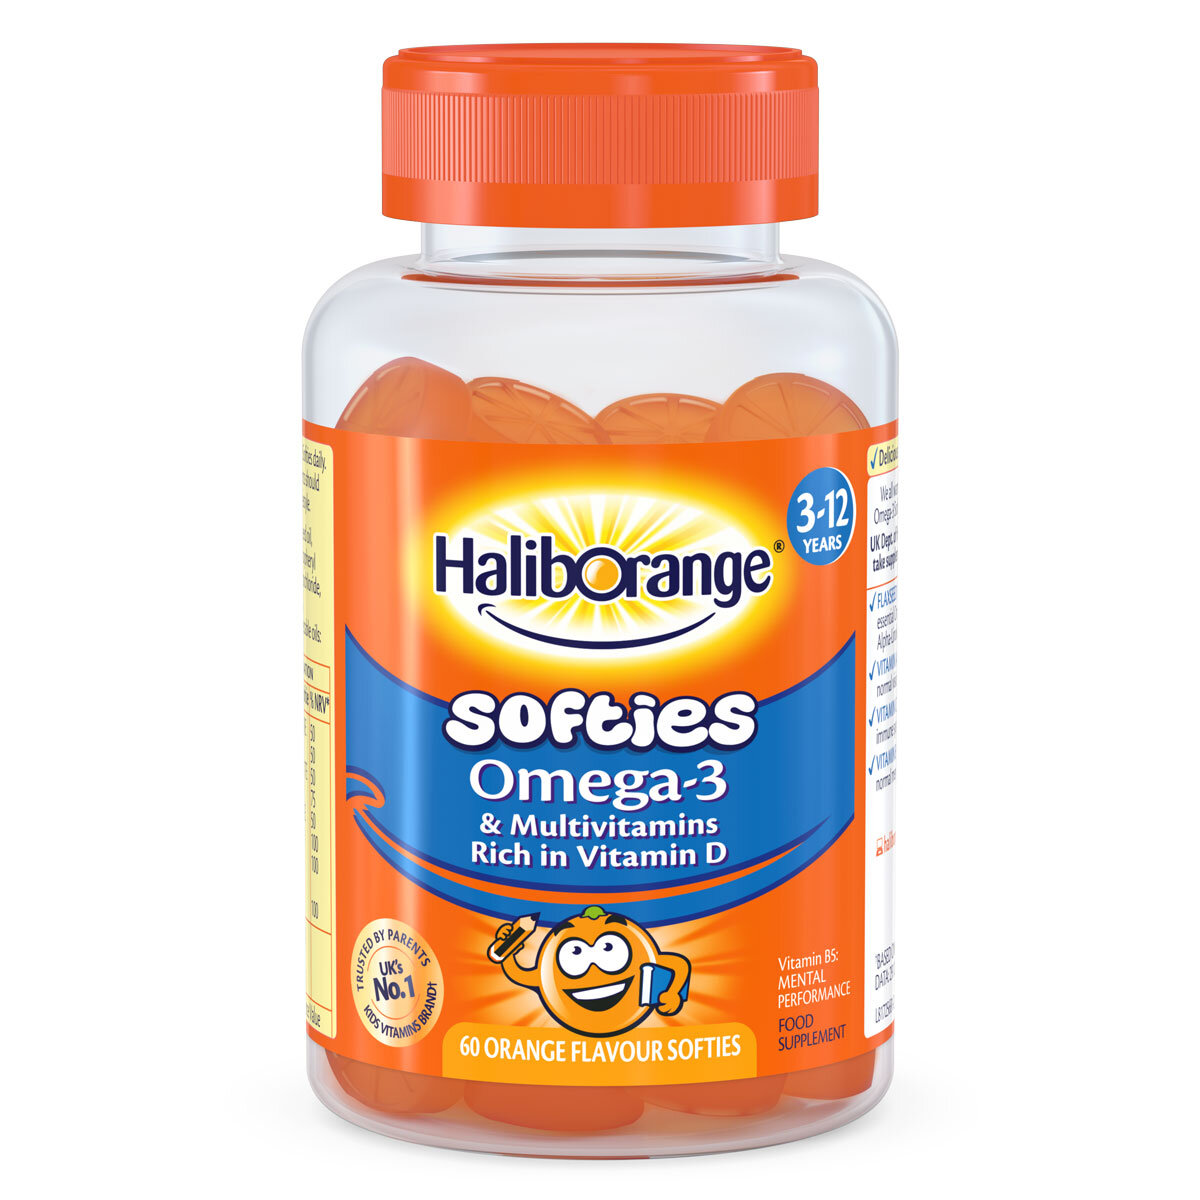 Haliborange Softies Omega-3, 60 Count